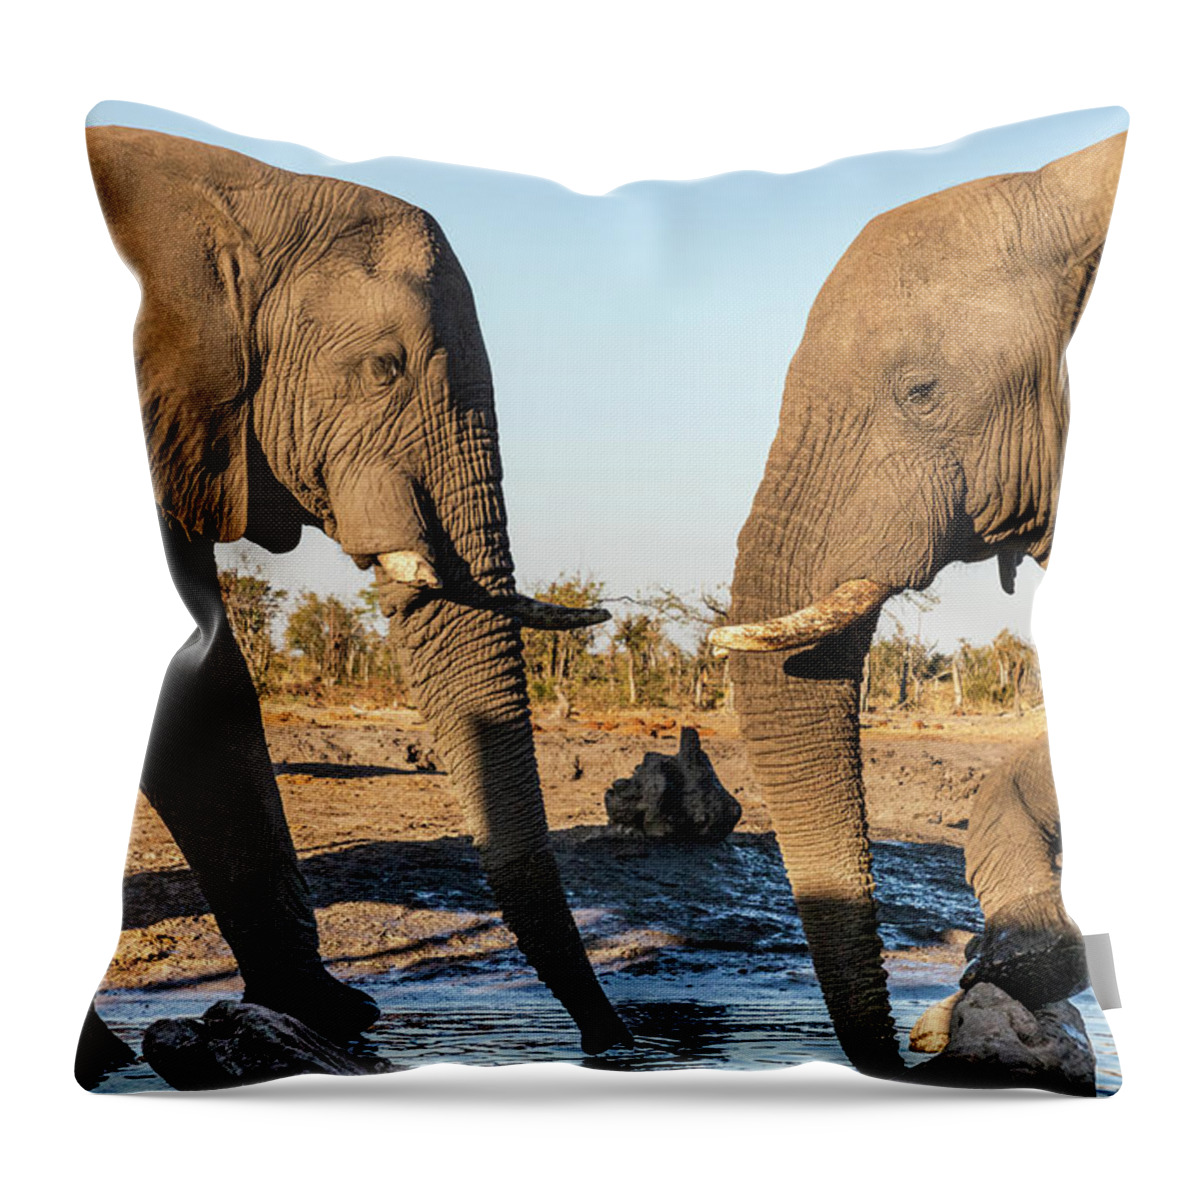 African Elephant Throw Pillow featuring the photograph Between Friends by Elvira Peretsman